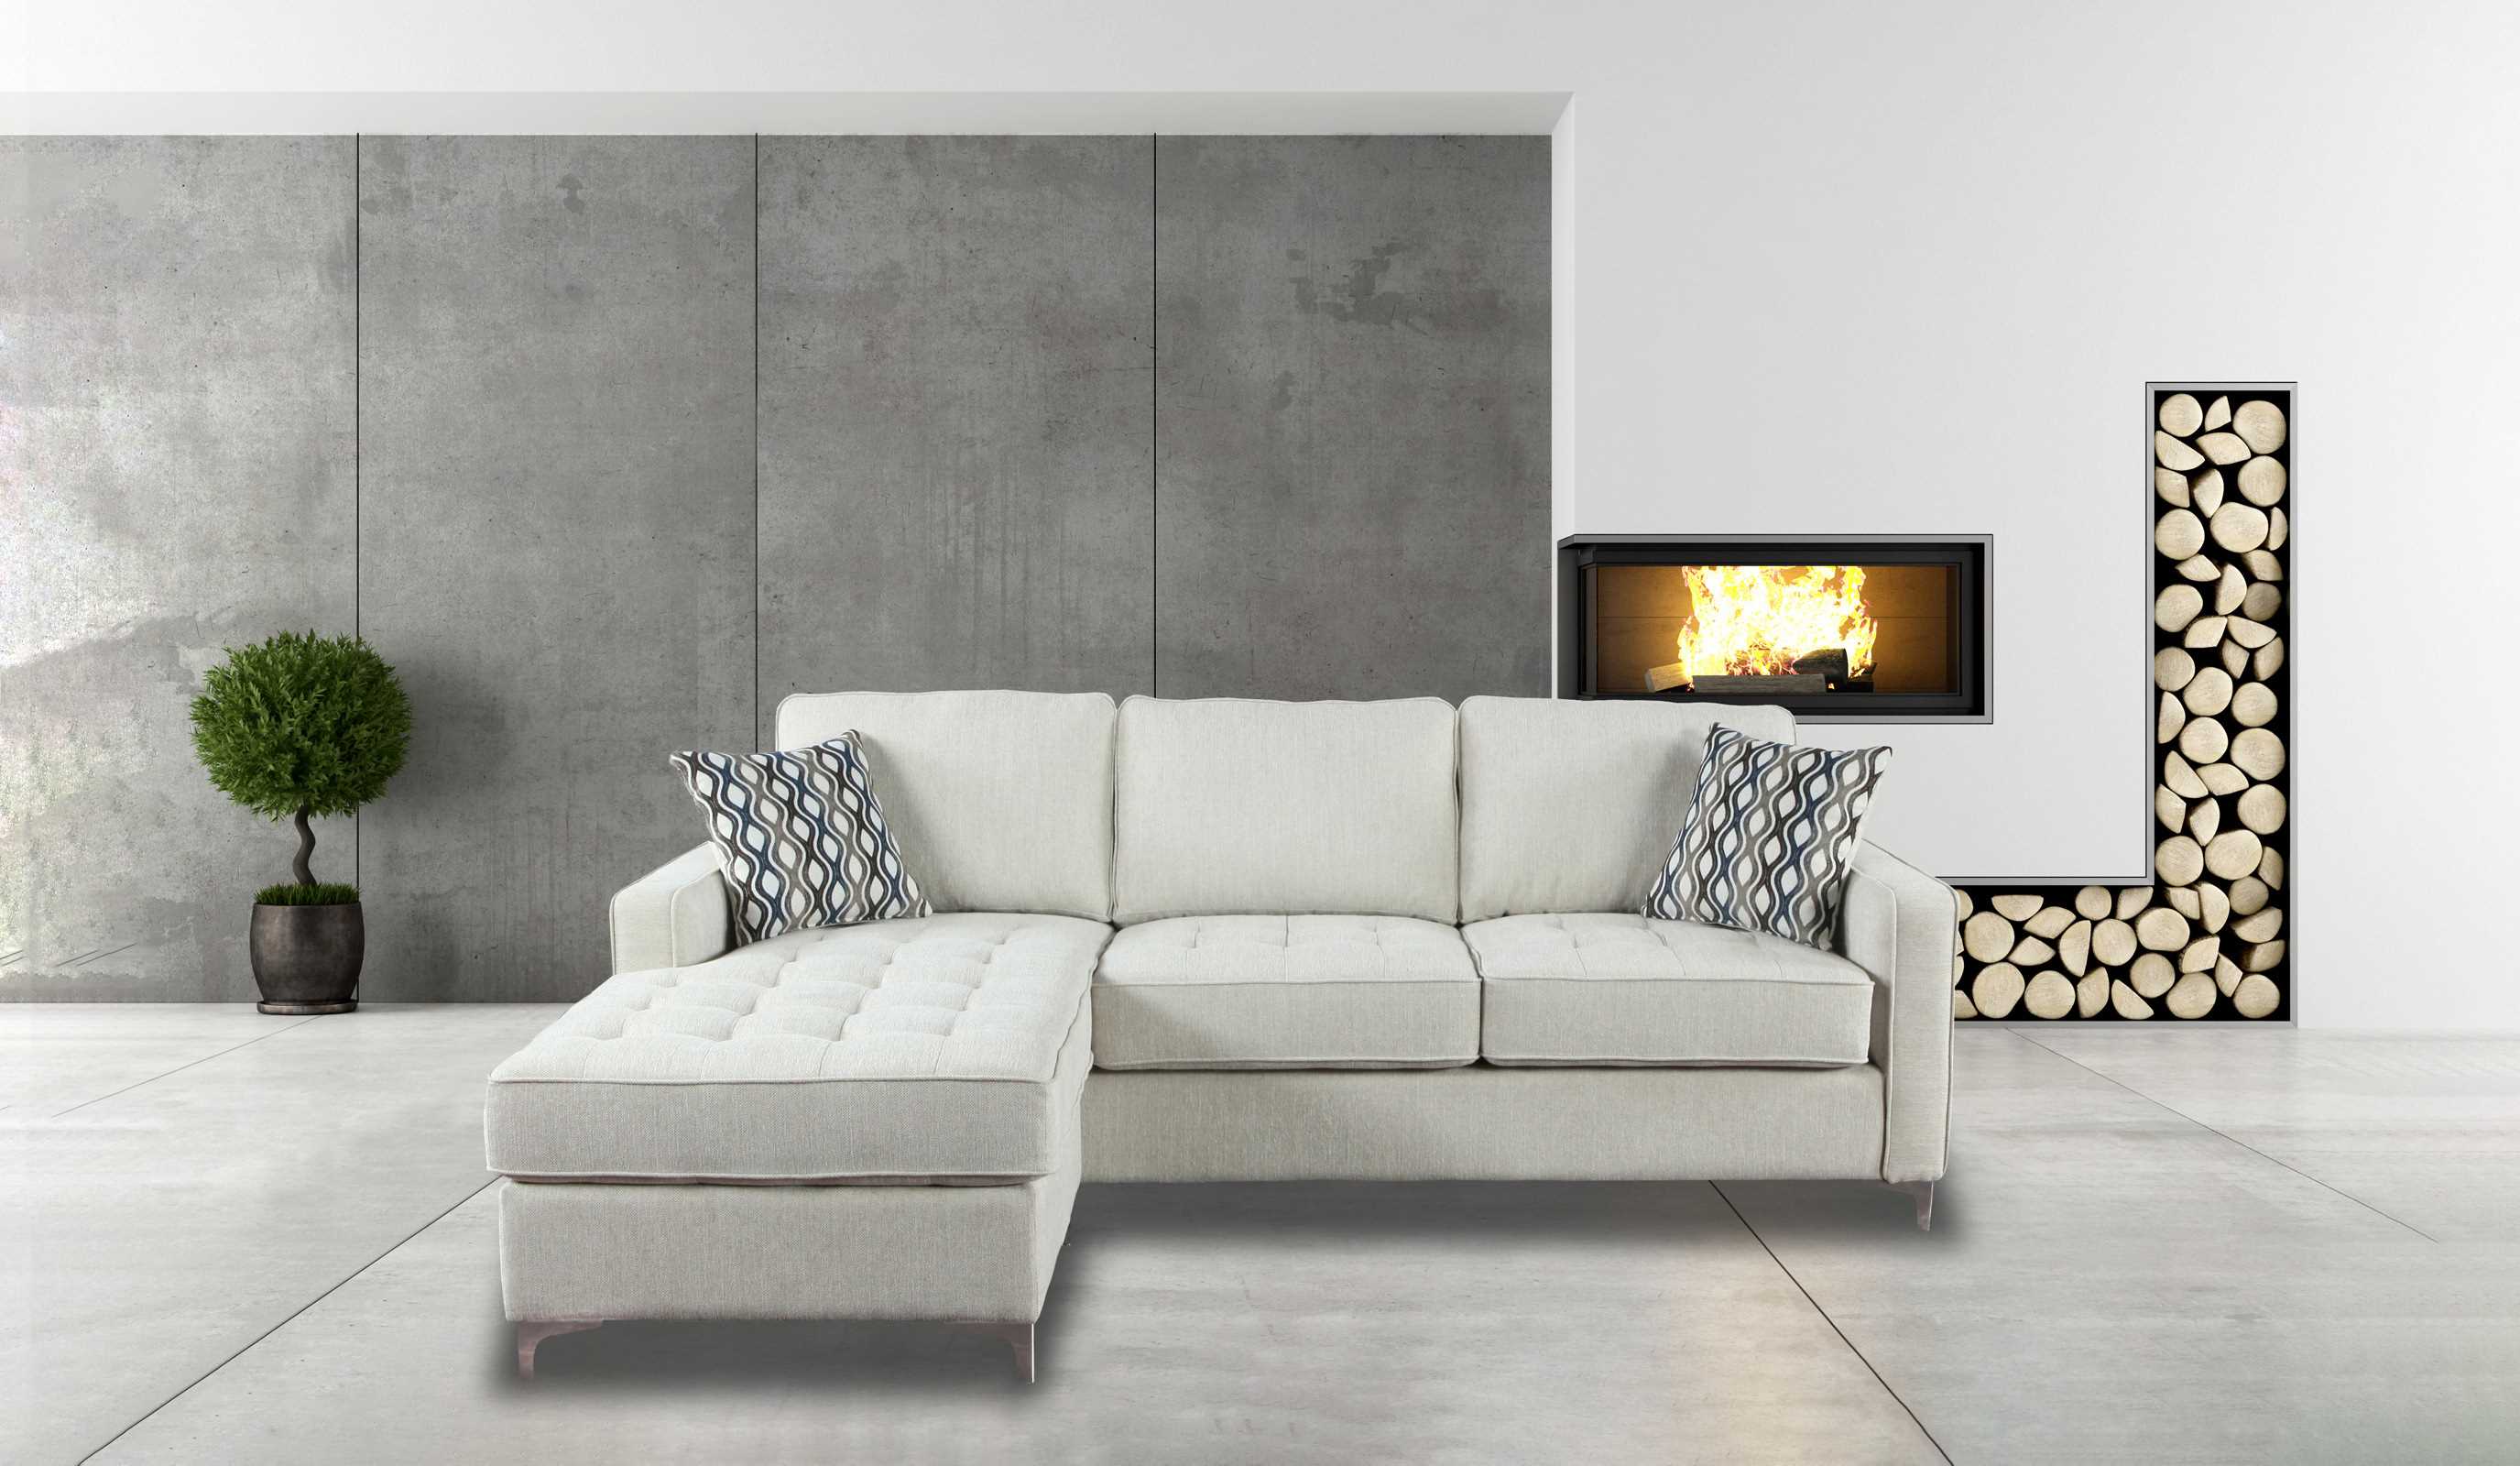 Hudson Reversible Sectional Sofa - Platinam Grey Fabric 9049PLT